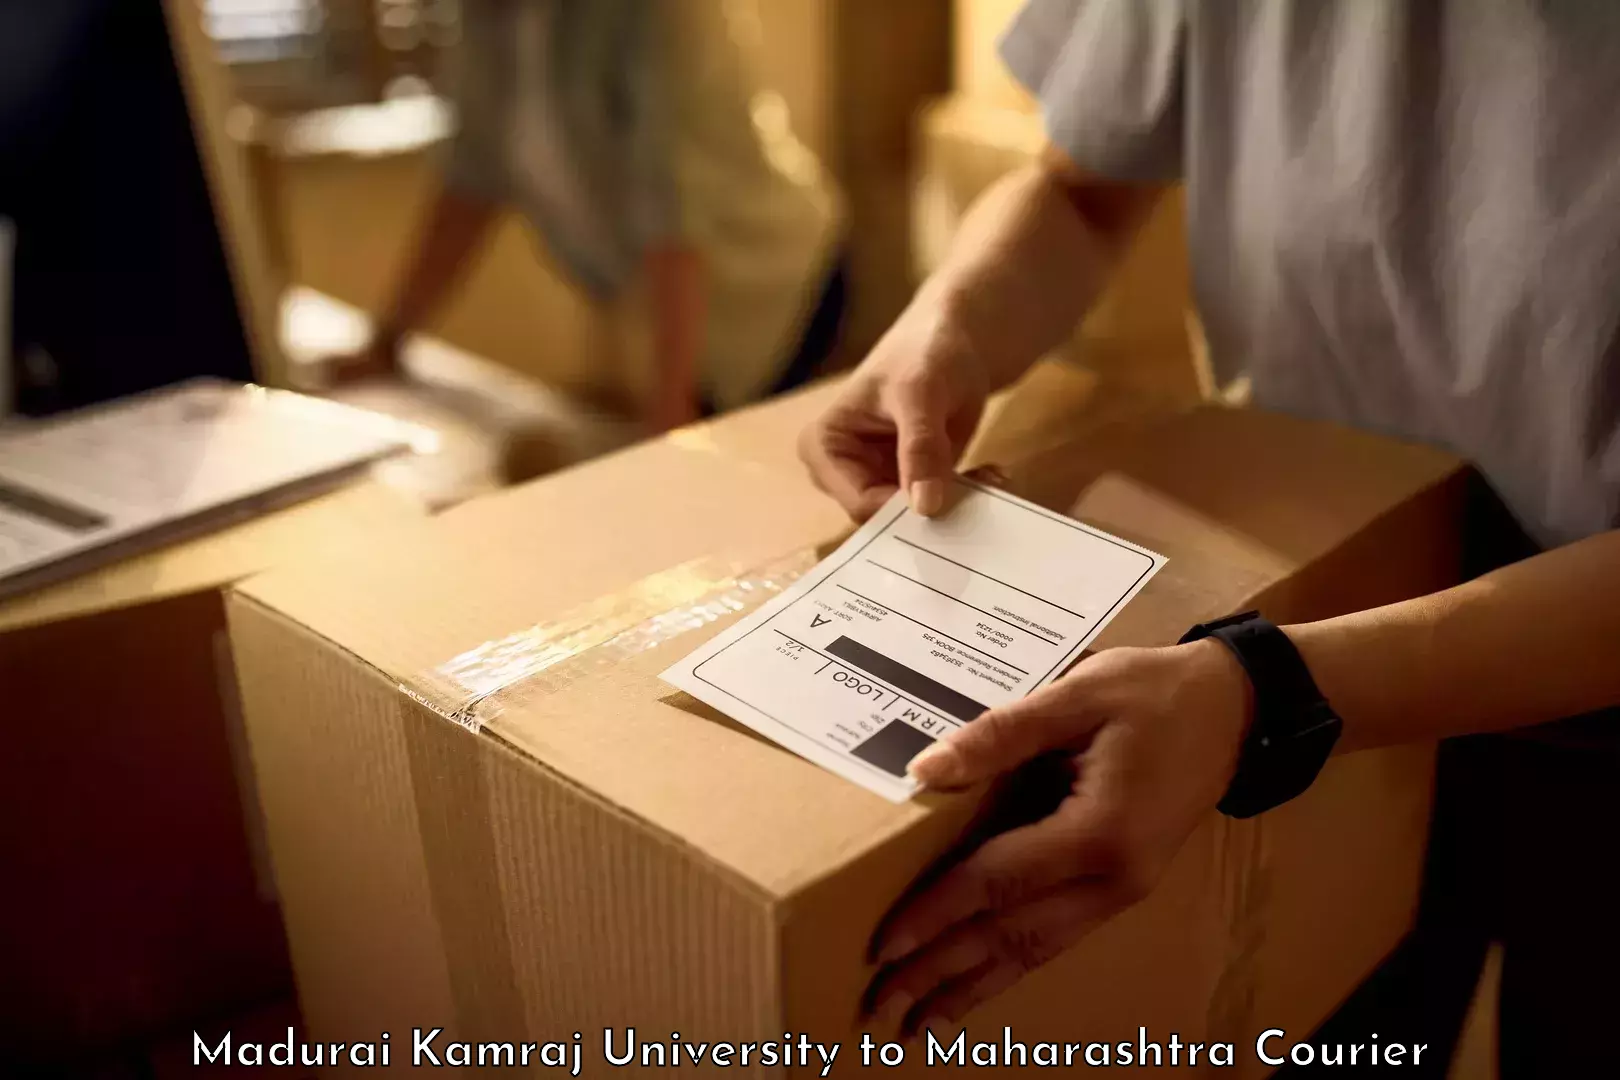 Baggage relocation service Madurai Kamraj University to Dharmabad